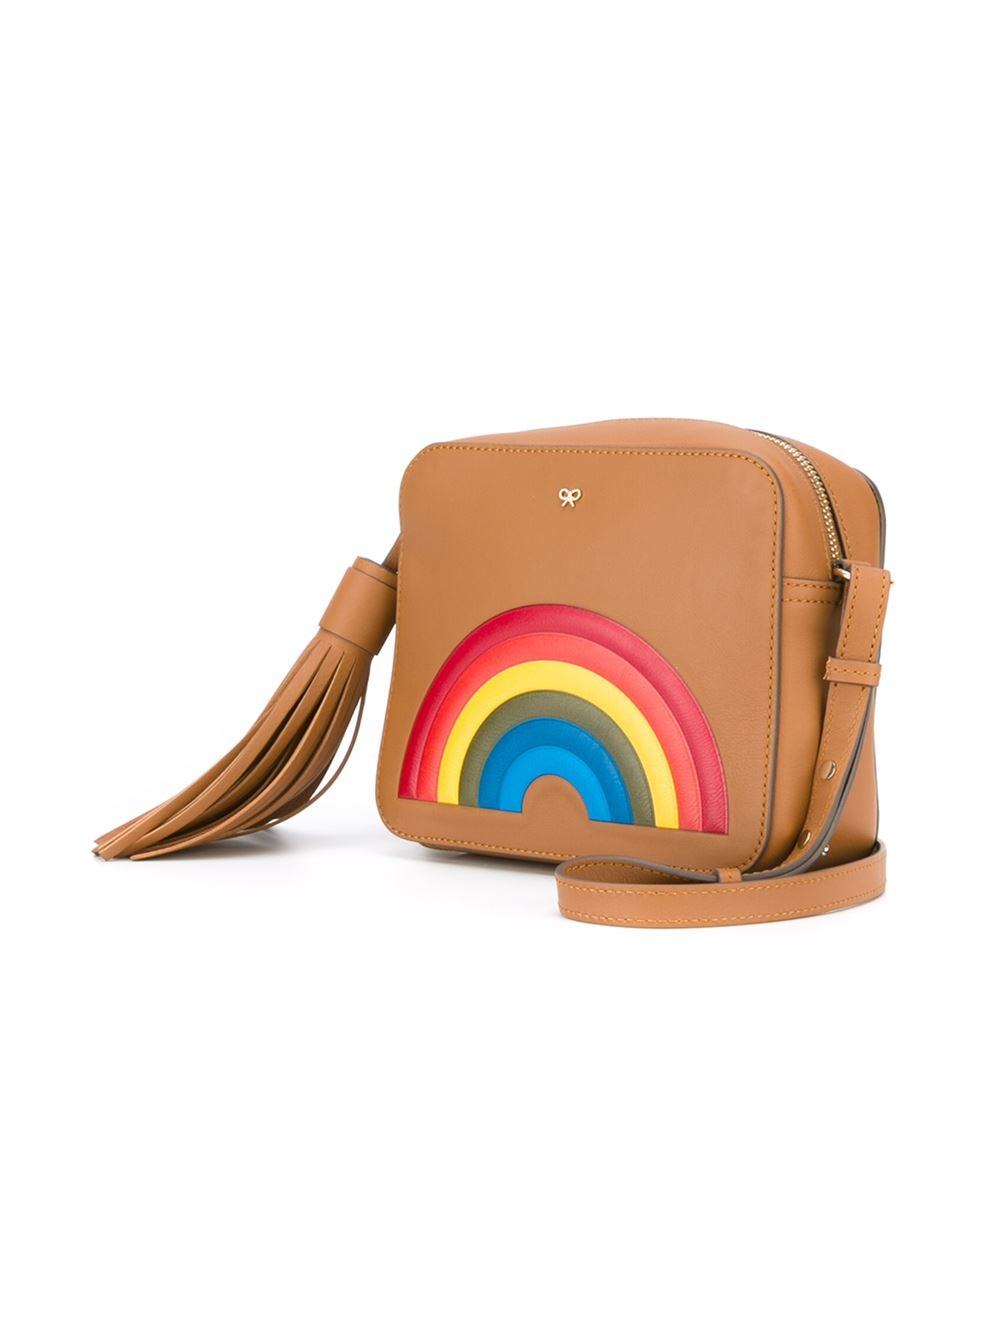 Lyst - Anya Hindmarch 'rainbow' Crossbody Bag in Brown